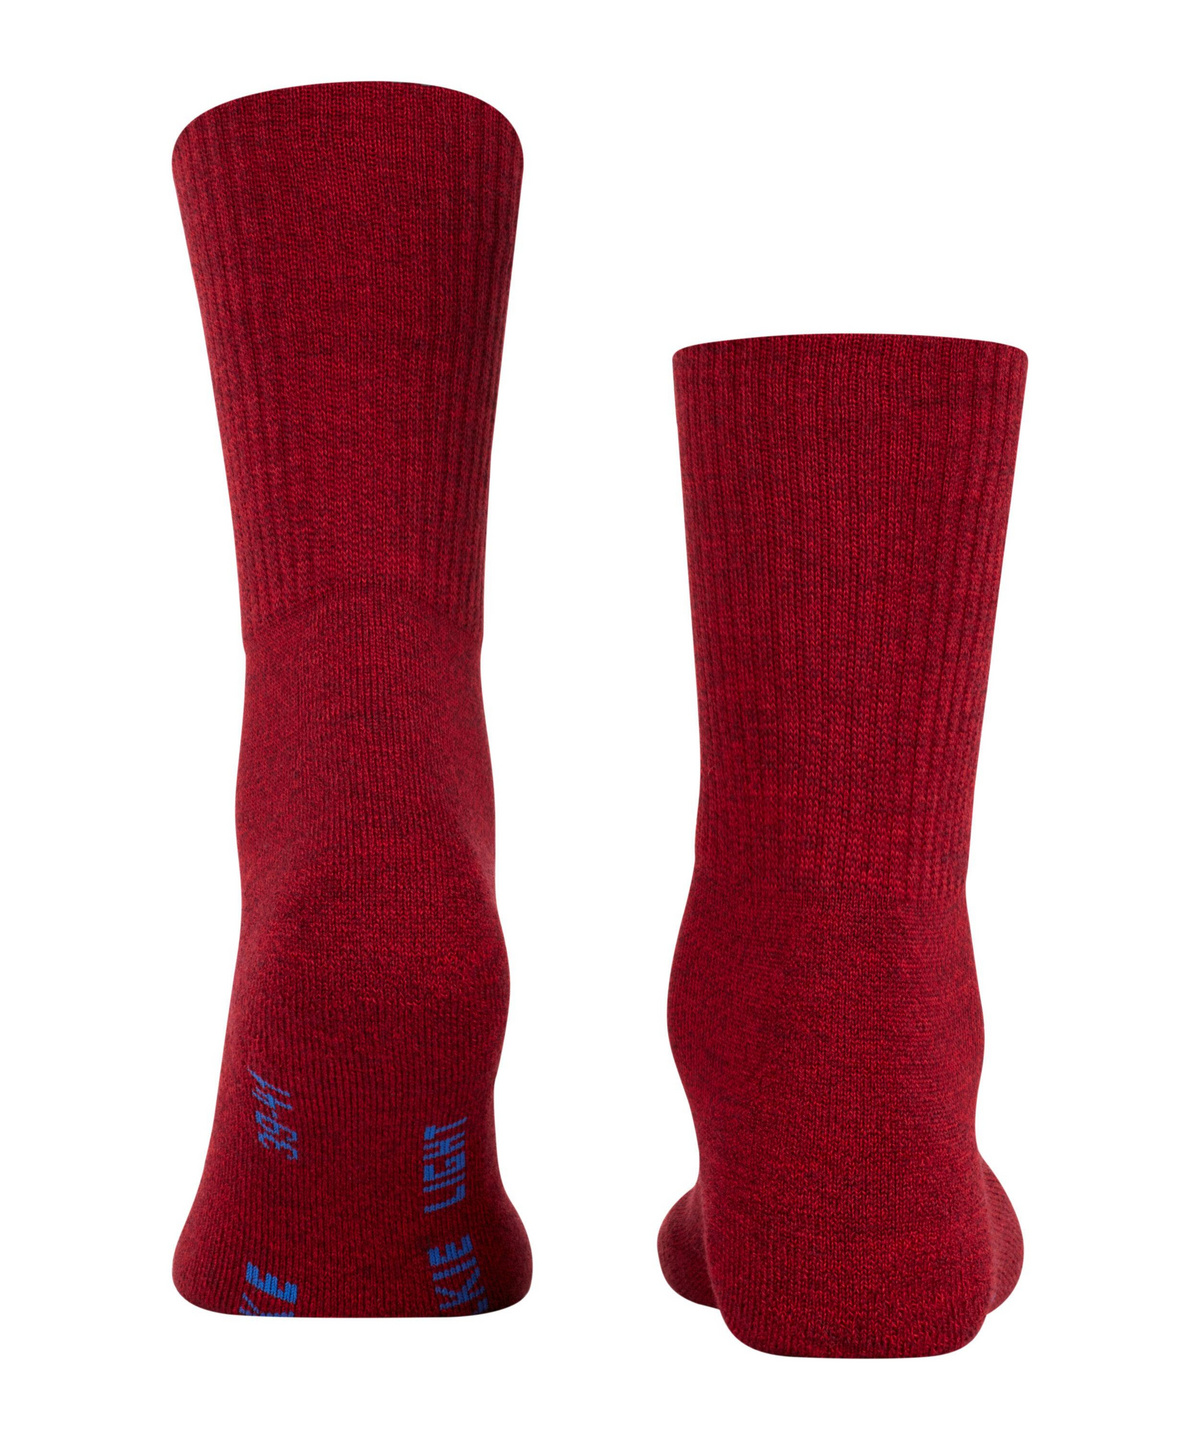 Womens Clothing Hosiery Socks FALKE Walkie Socks Light Pack Of 3 in Red 